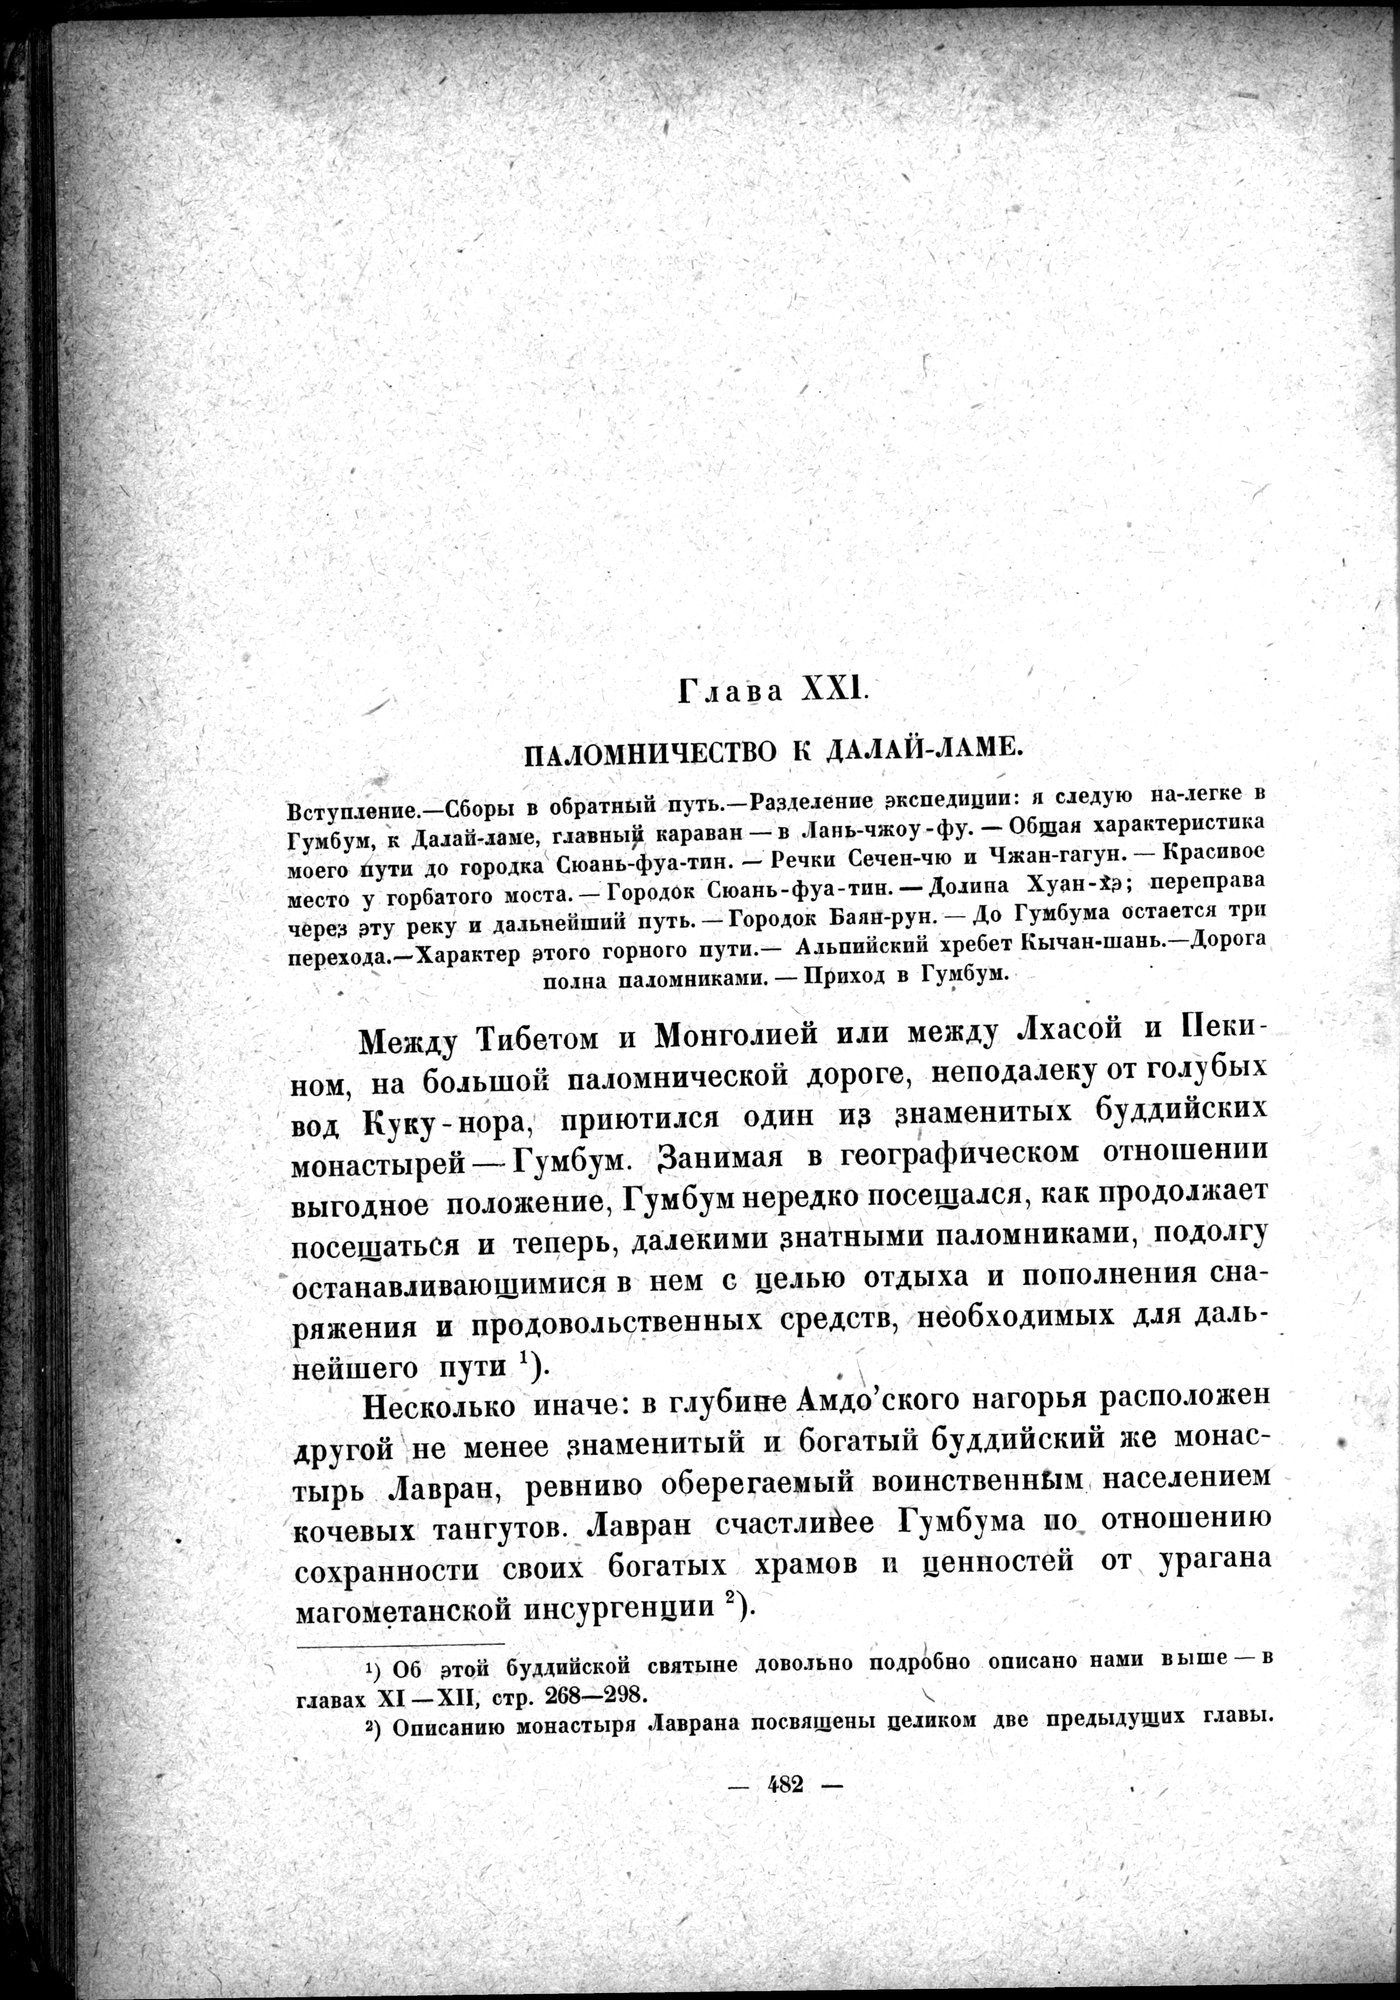 Mongoliya i Amdo i mertby gorod Khara-Khoto : vol.1 / Page 550 (Grayscale High Resolution Image)